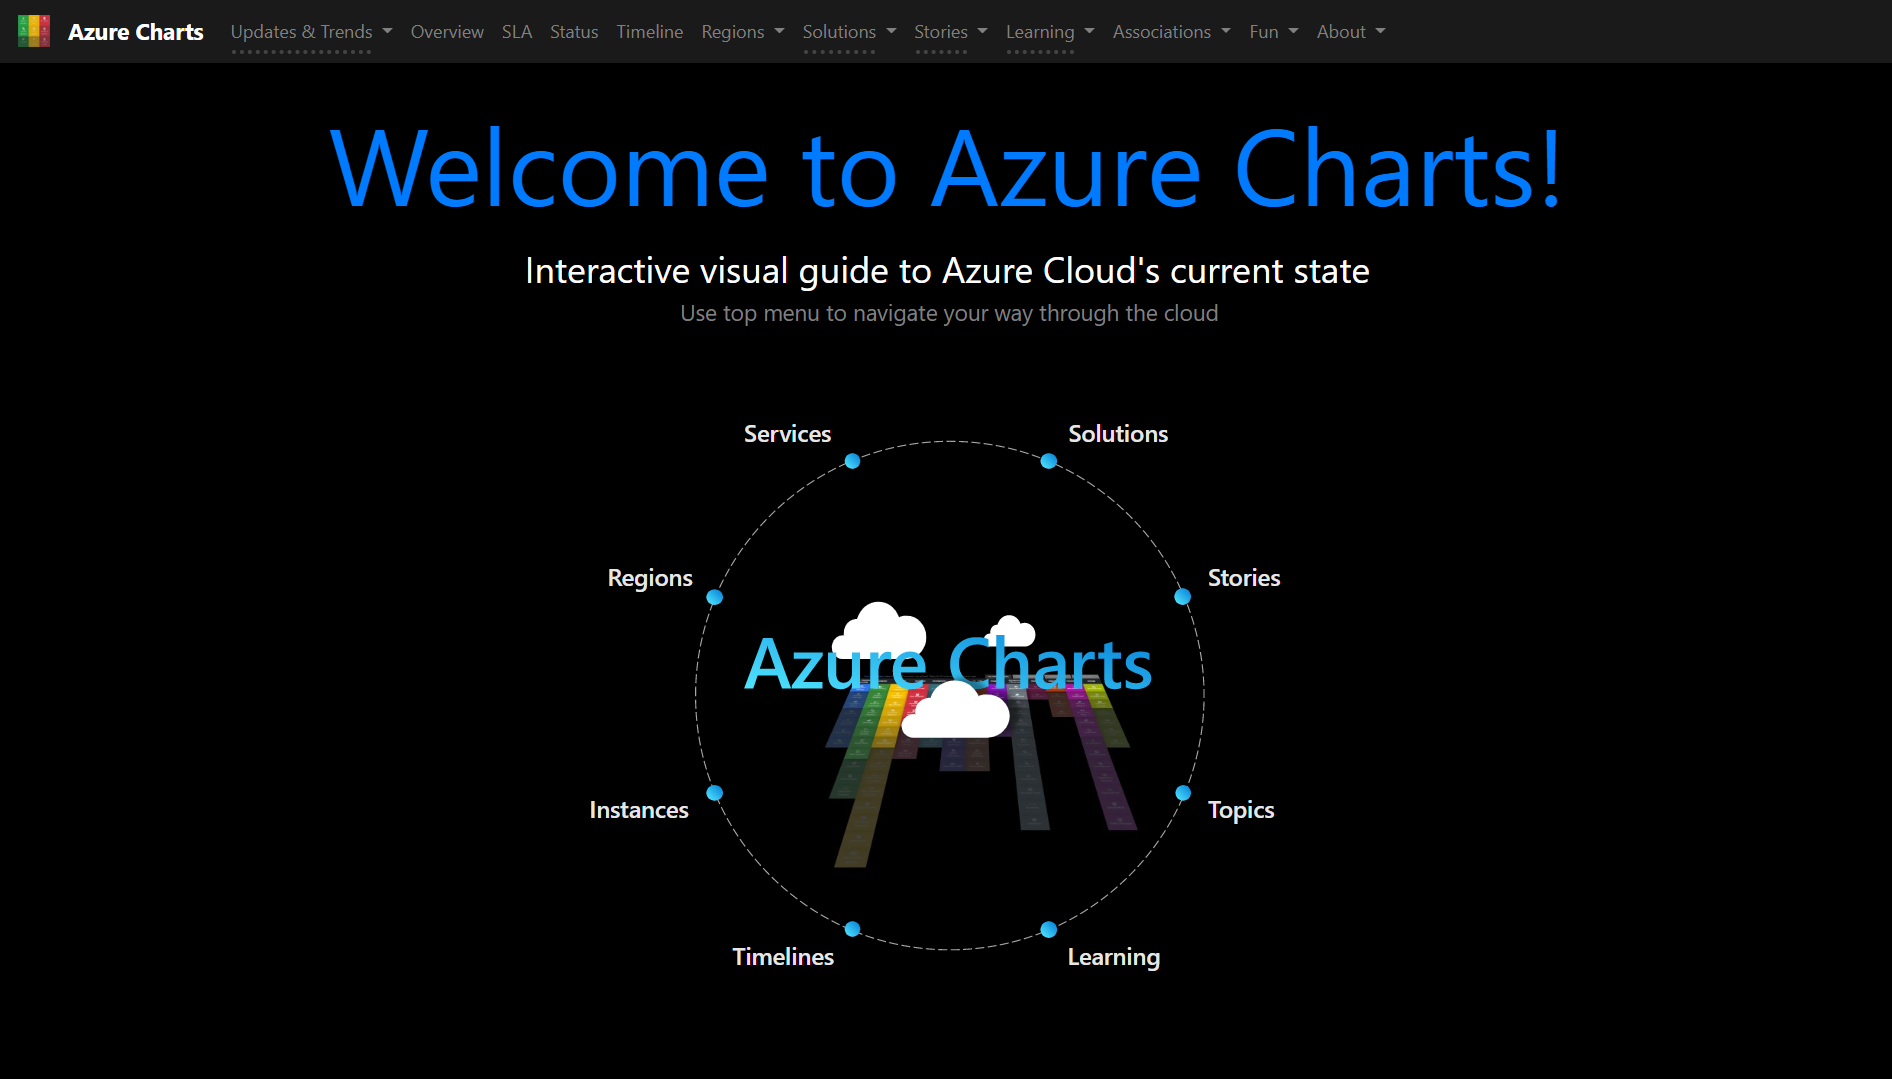 Azure Charts website homepage